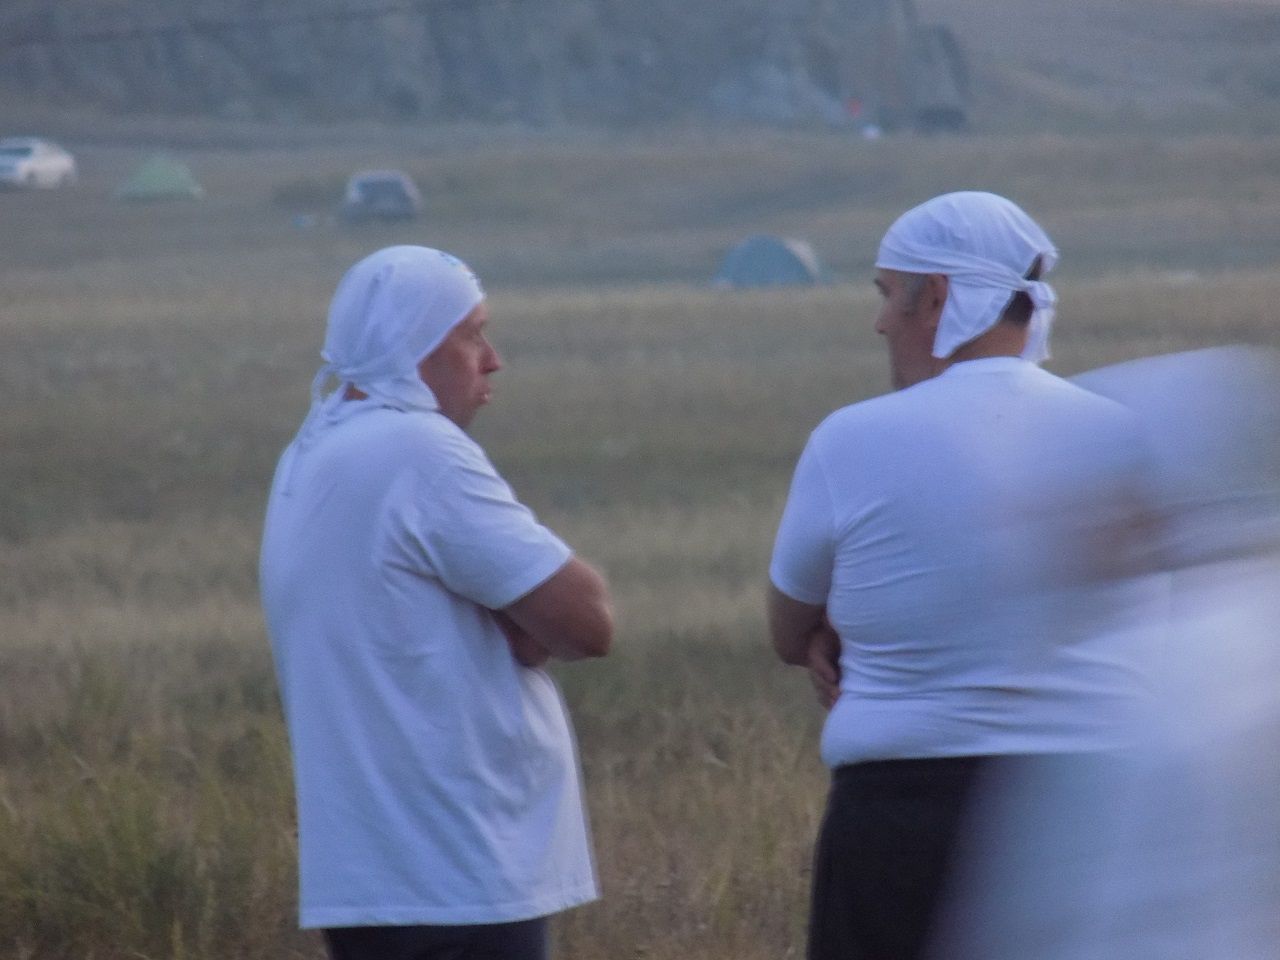 растановка - Геоглифы Казахстана + АркаИм август 2016 год